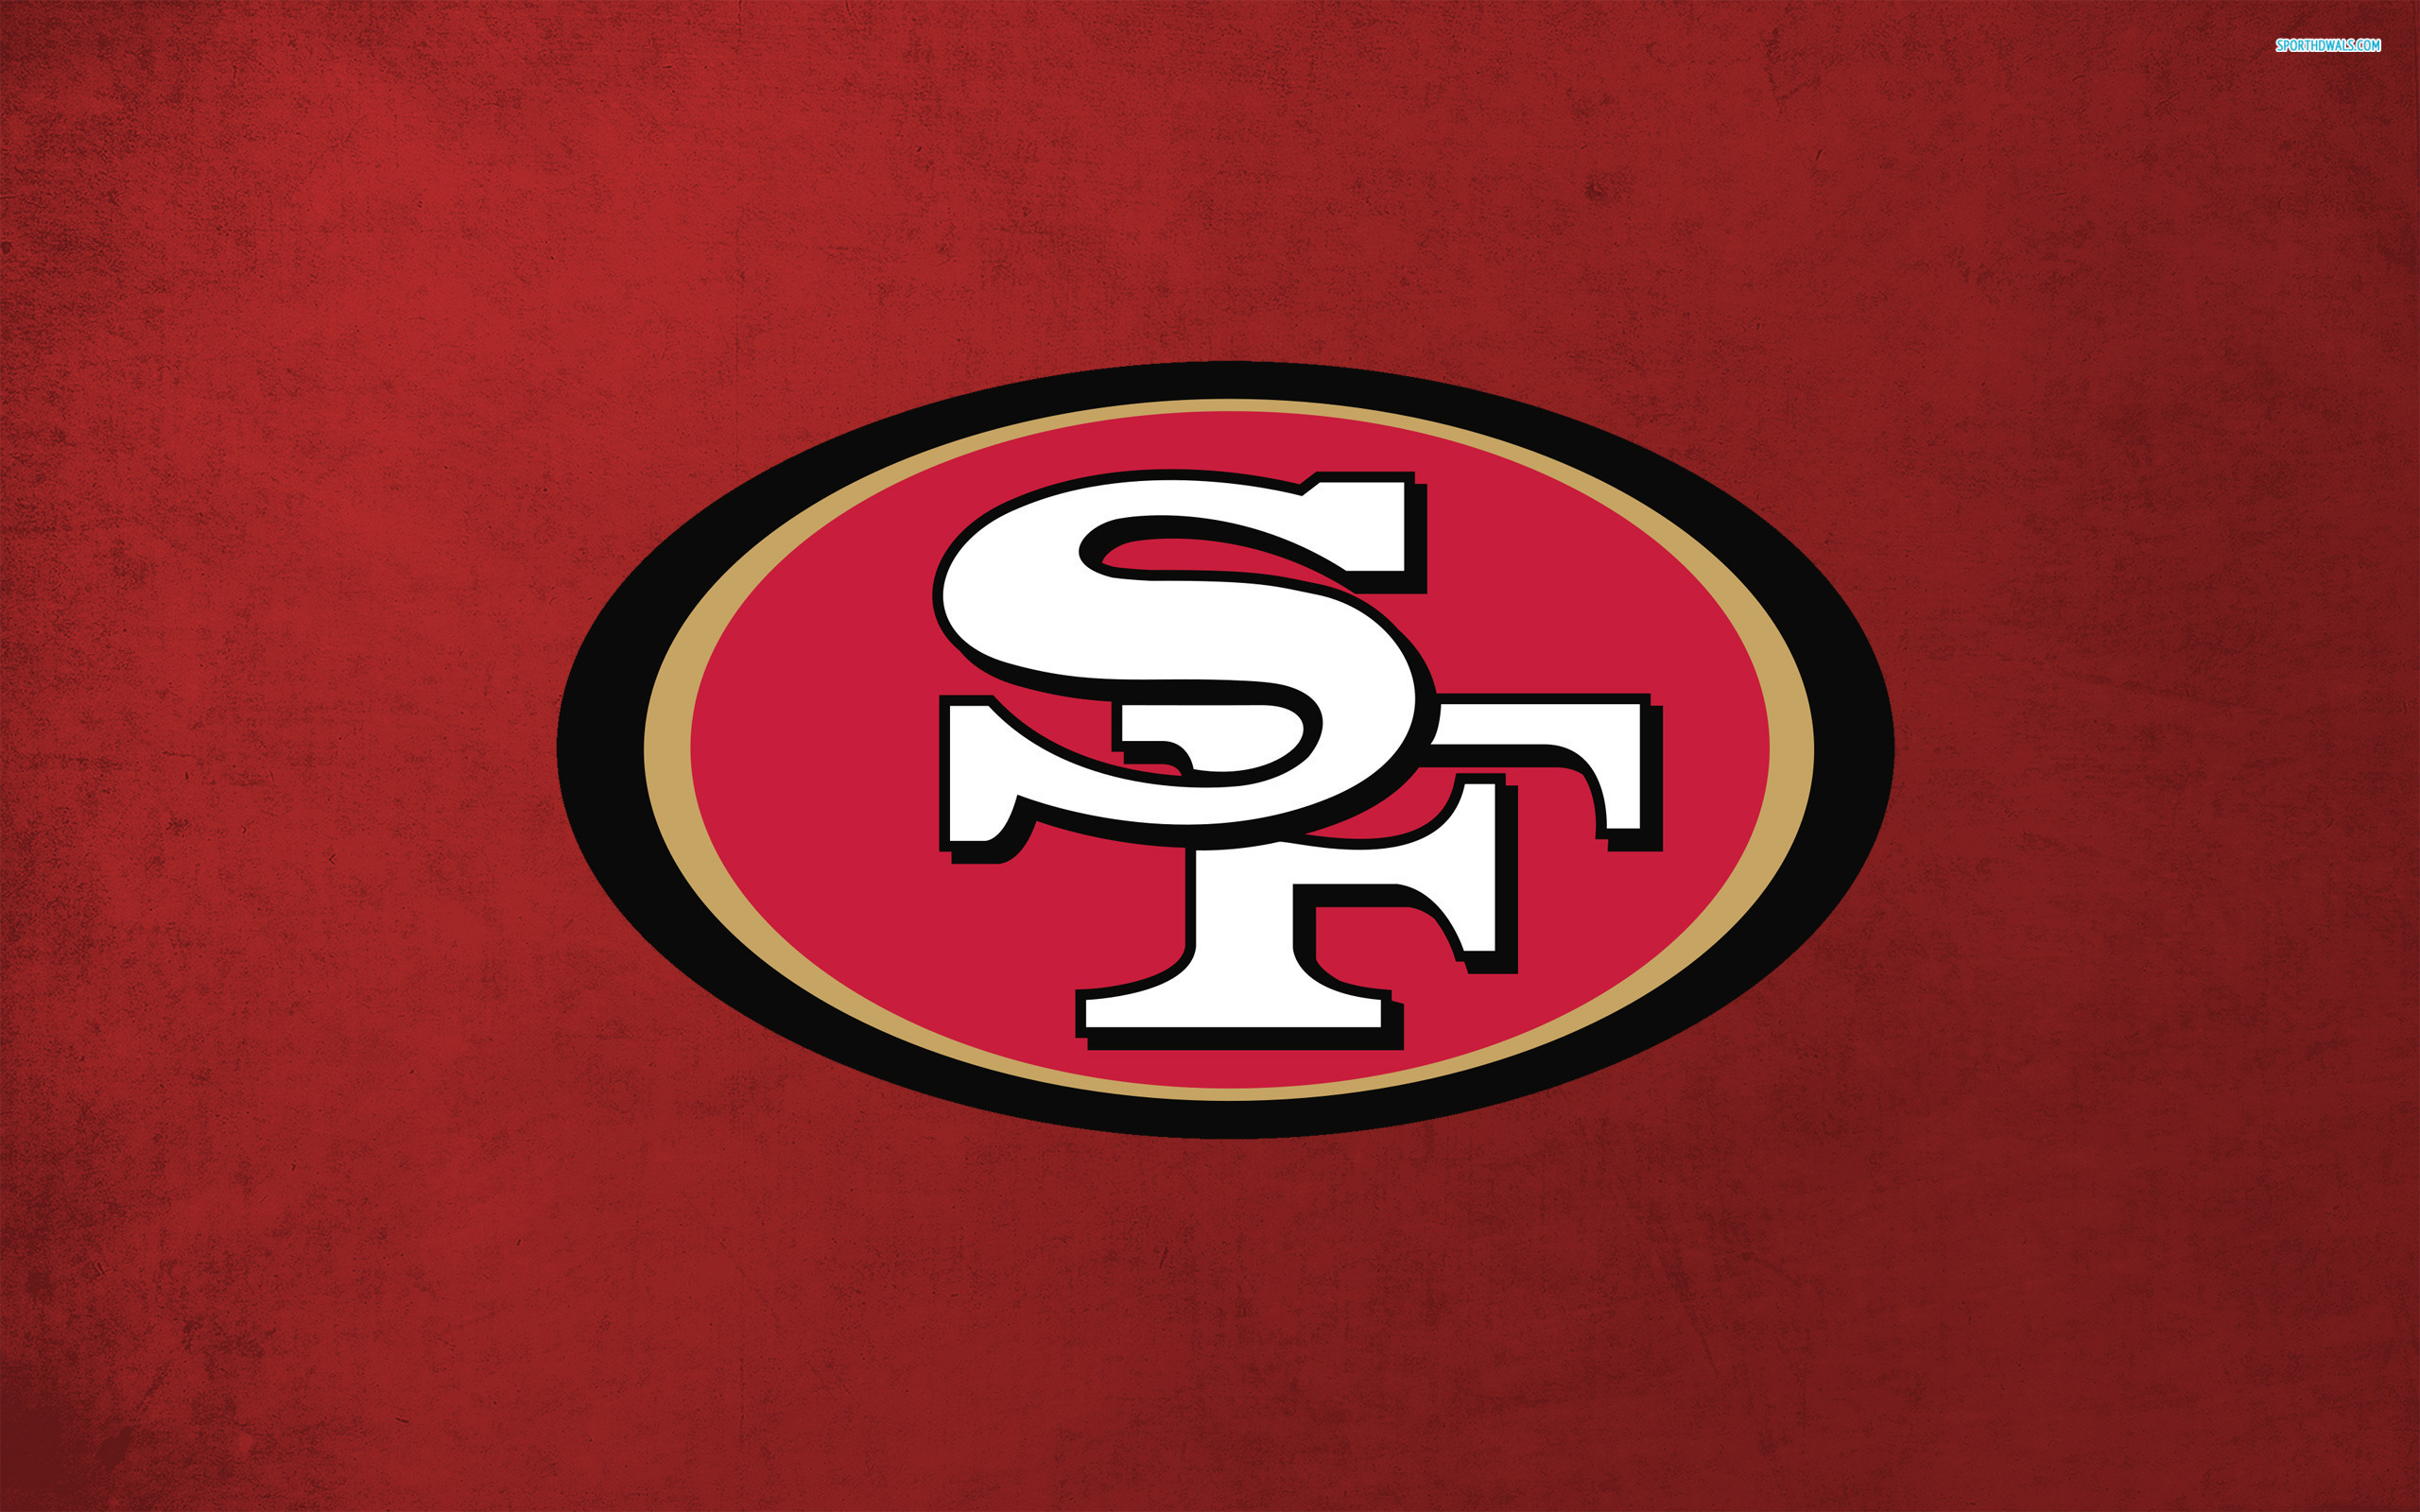 49 page. Лого НФЛ Сан-Франциско Форти найнерс. SF 49 ers. San Francisco 49ers logo. SF 49 ers logo.